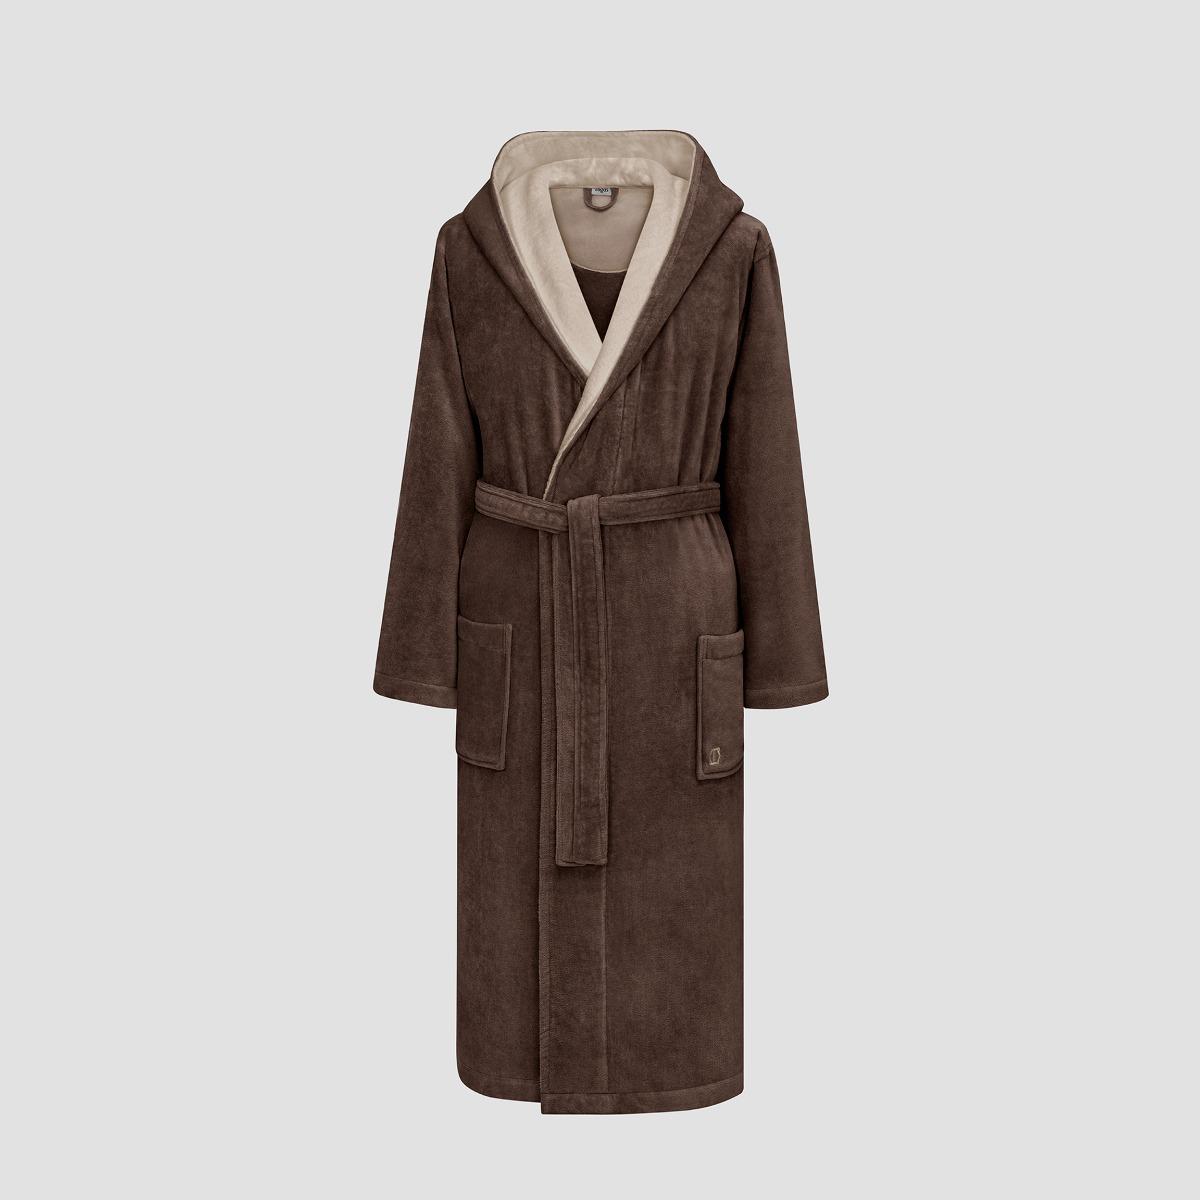 Халат Togas Арт Лайн коричневый с бежевым 2XL(54) халат togas арт лайн серый с белым м 48